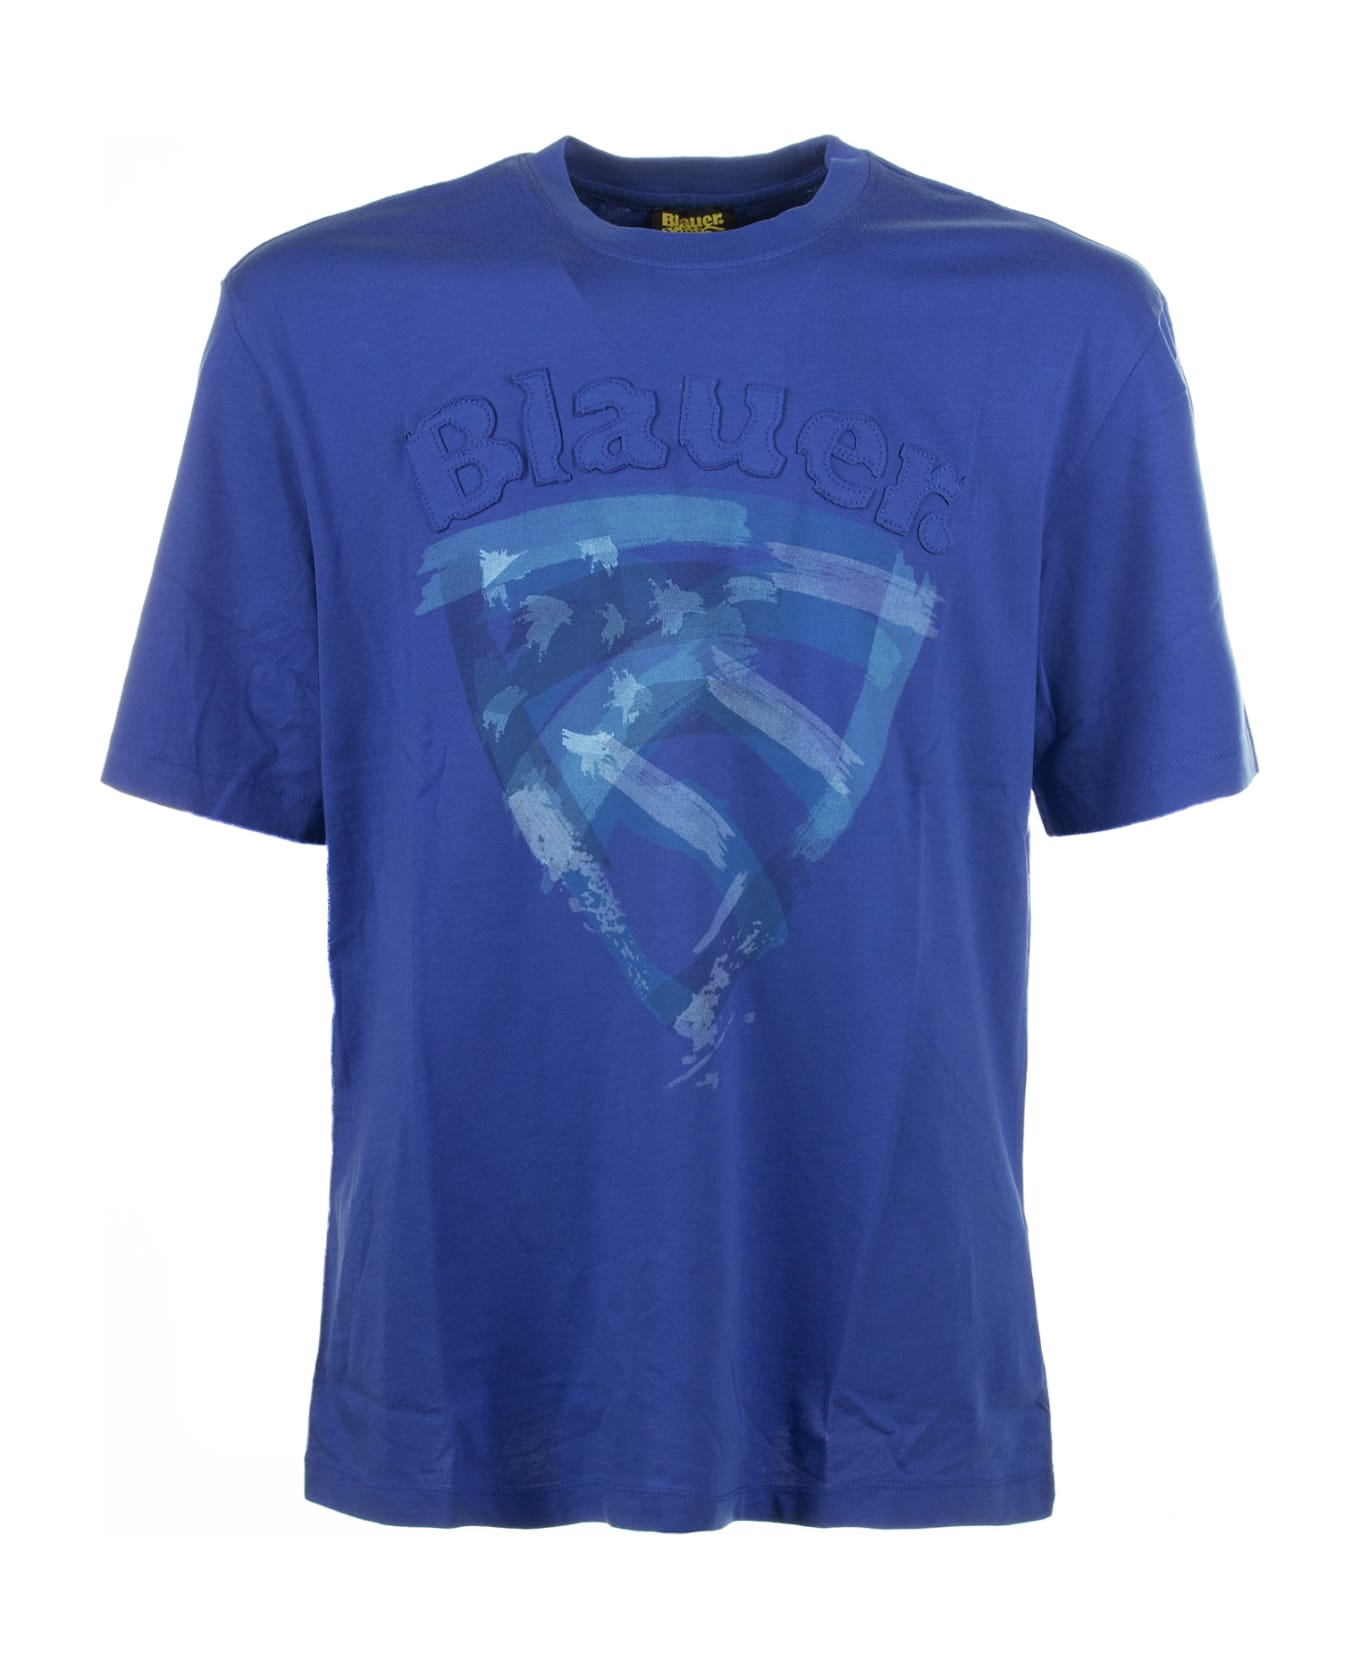 Blauer Blue Cotton T-shirt - MOLTO BLU シャツ